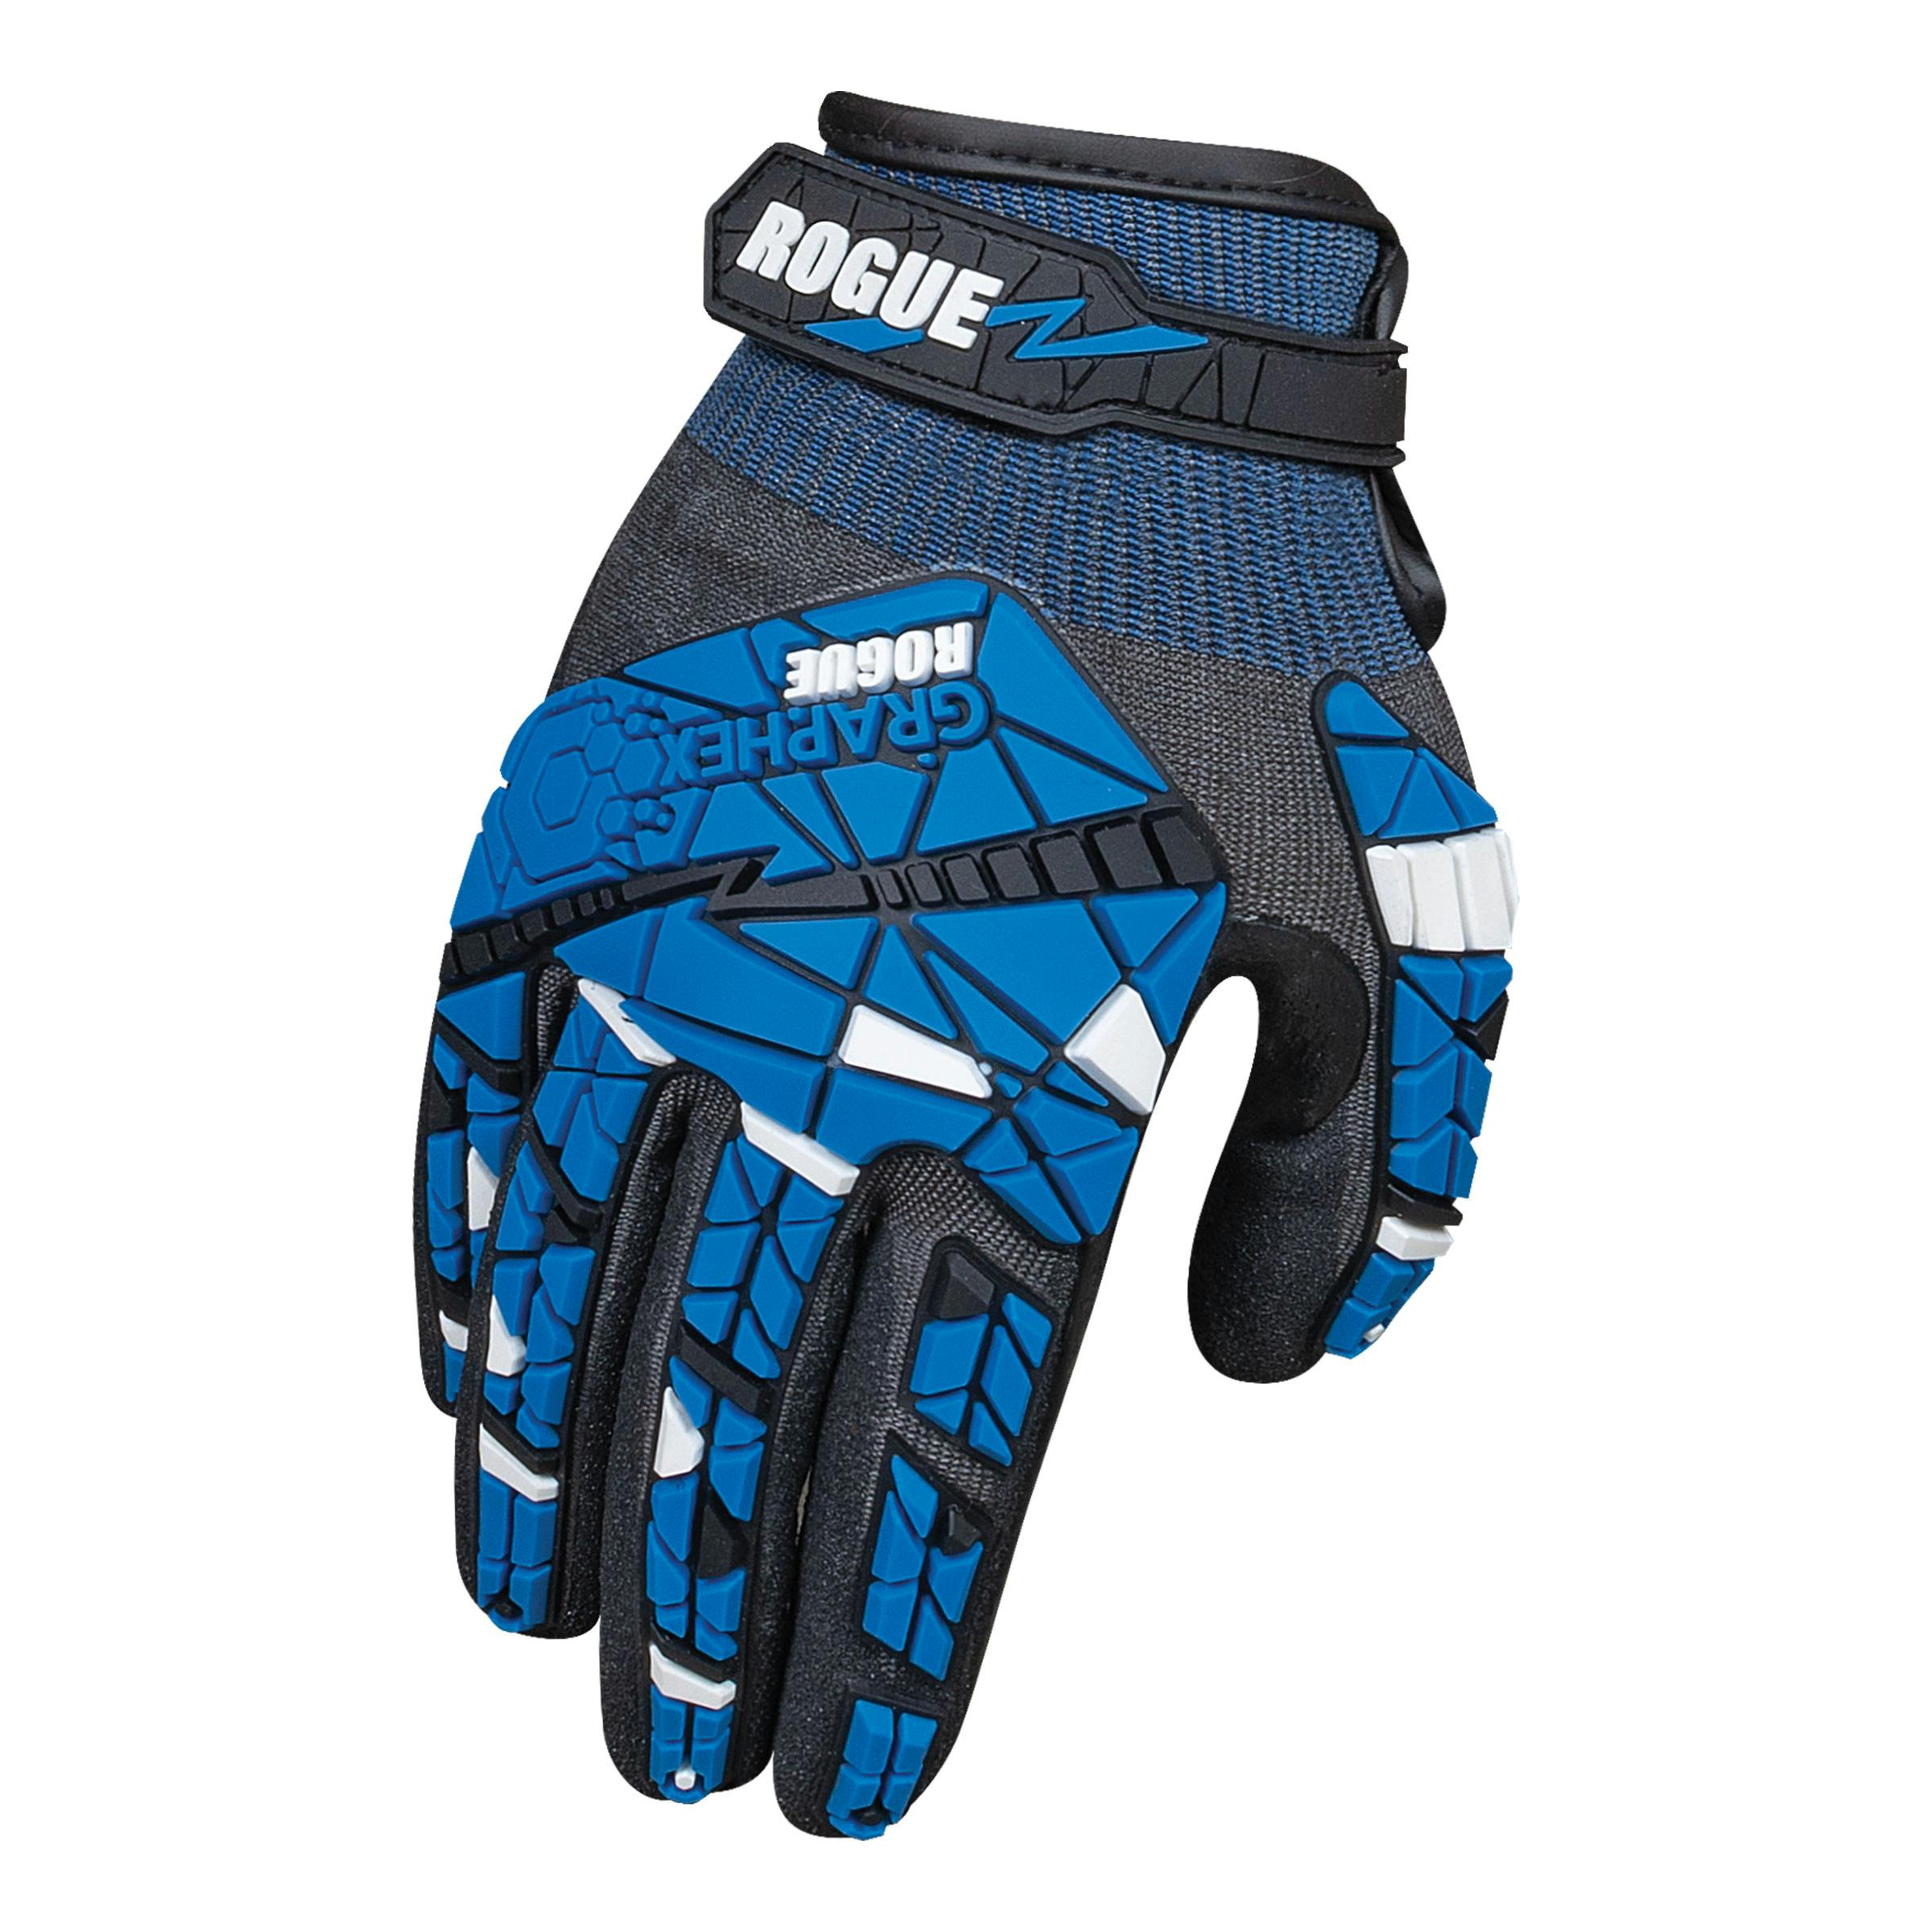 Graphex Rogue AGT Cut Resistant Glove (Cut Level F)_1